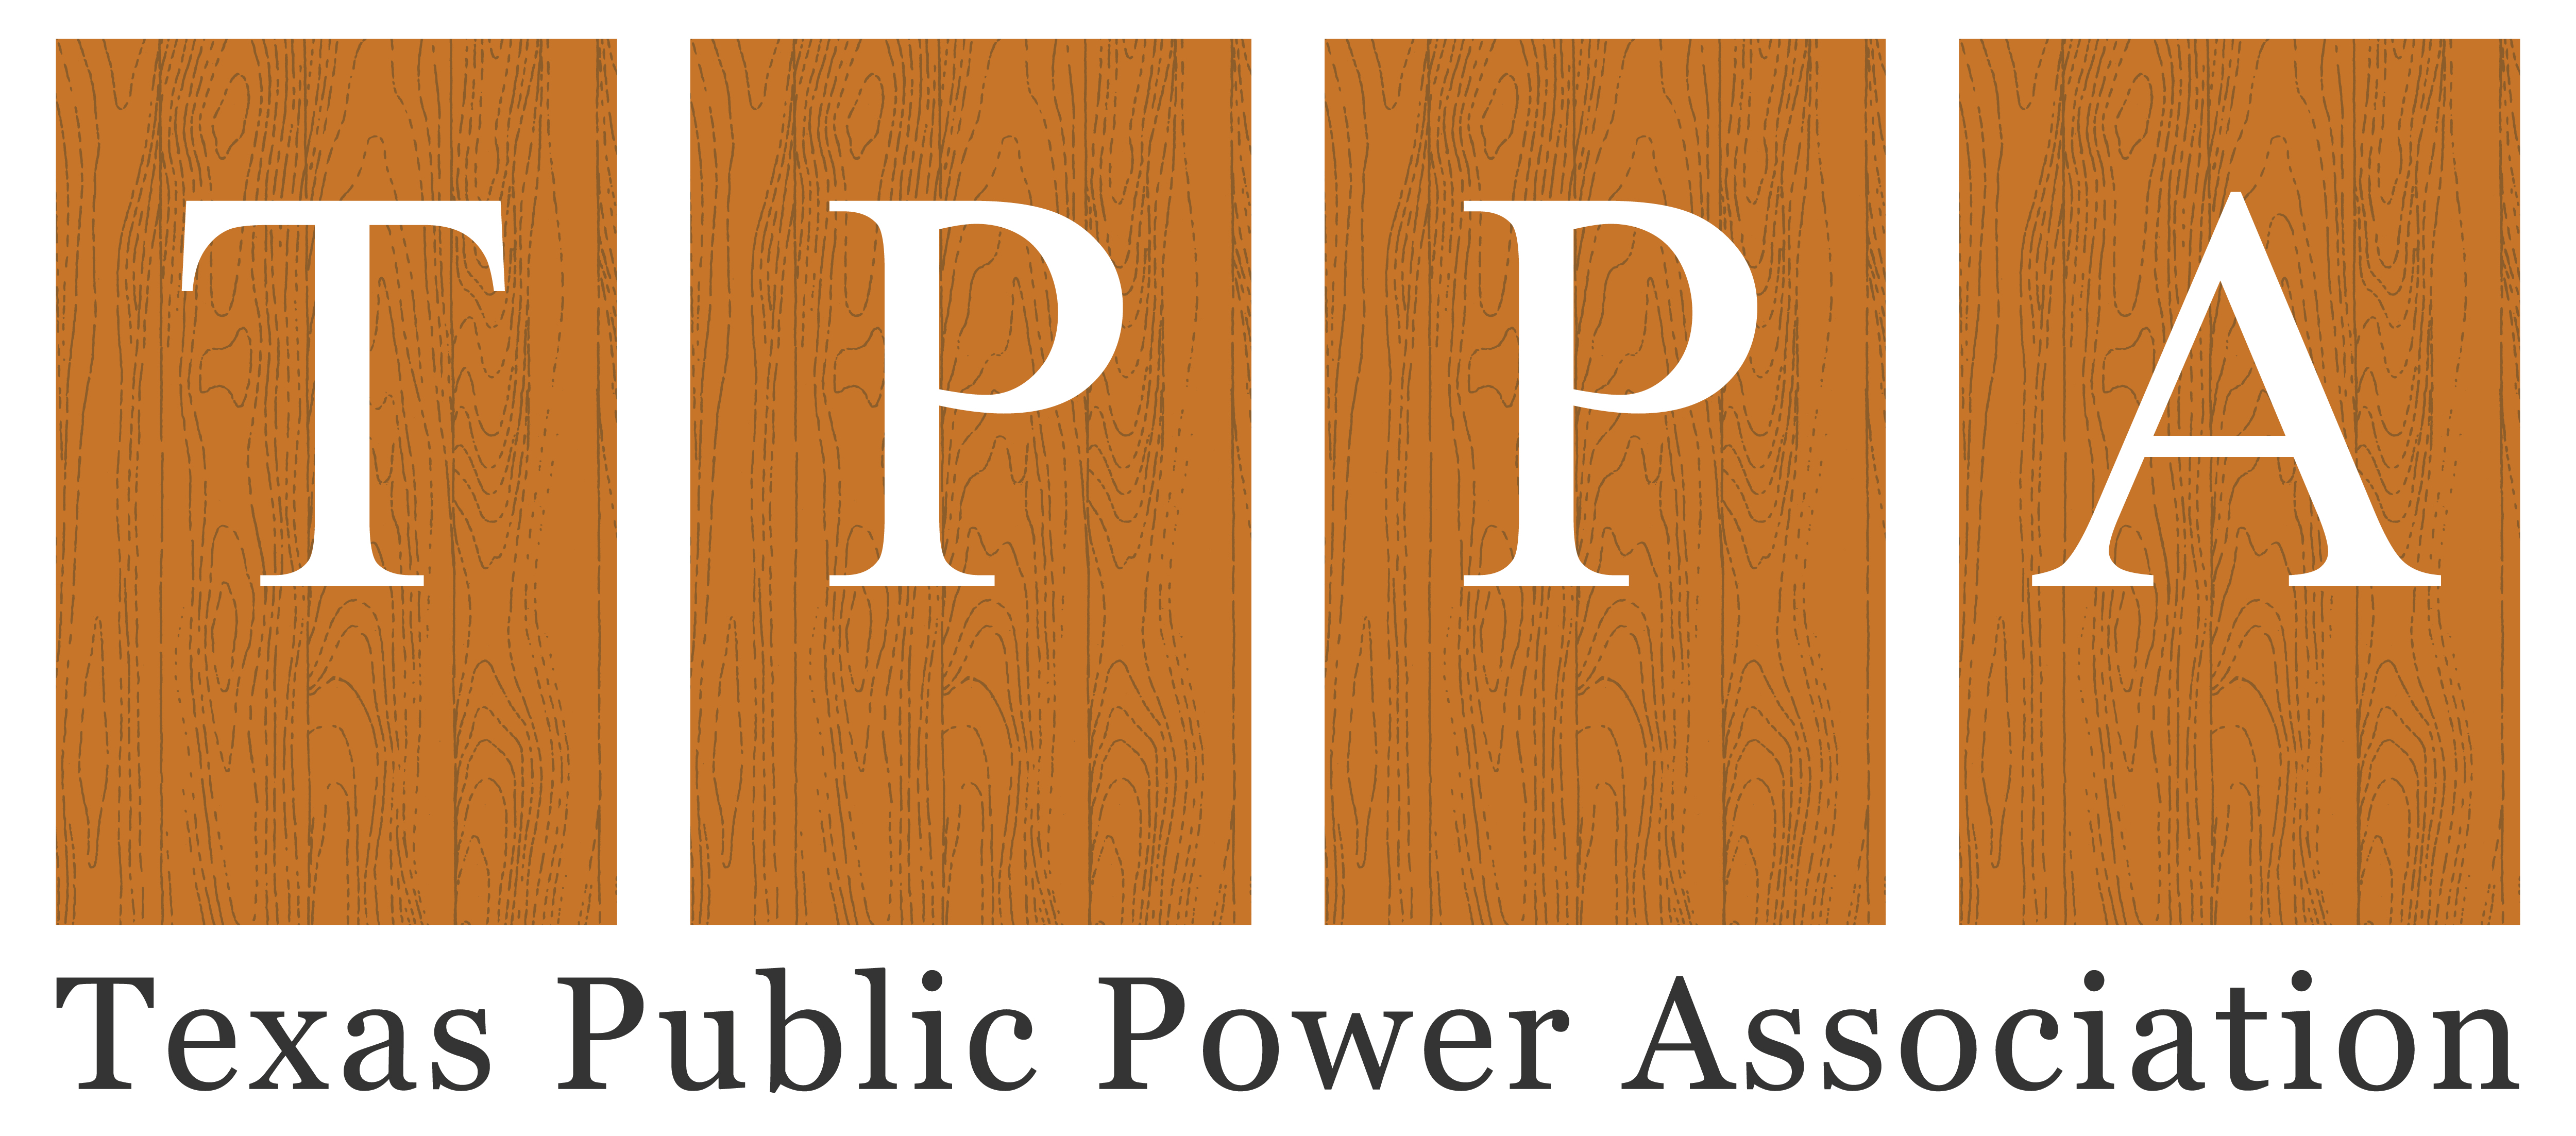 tppa logo